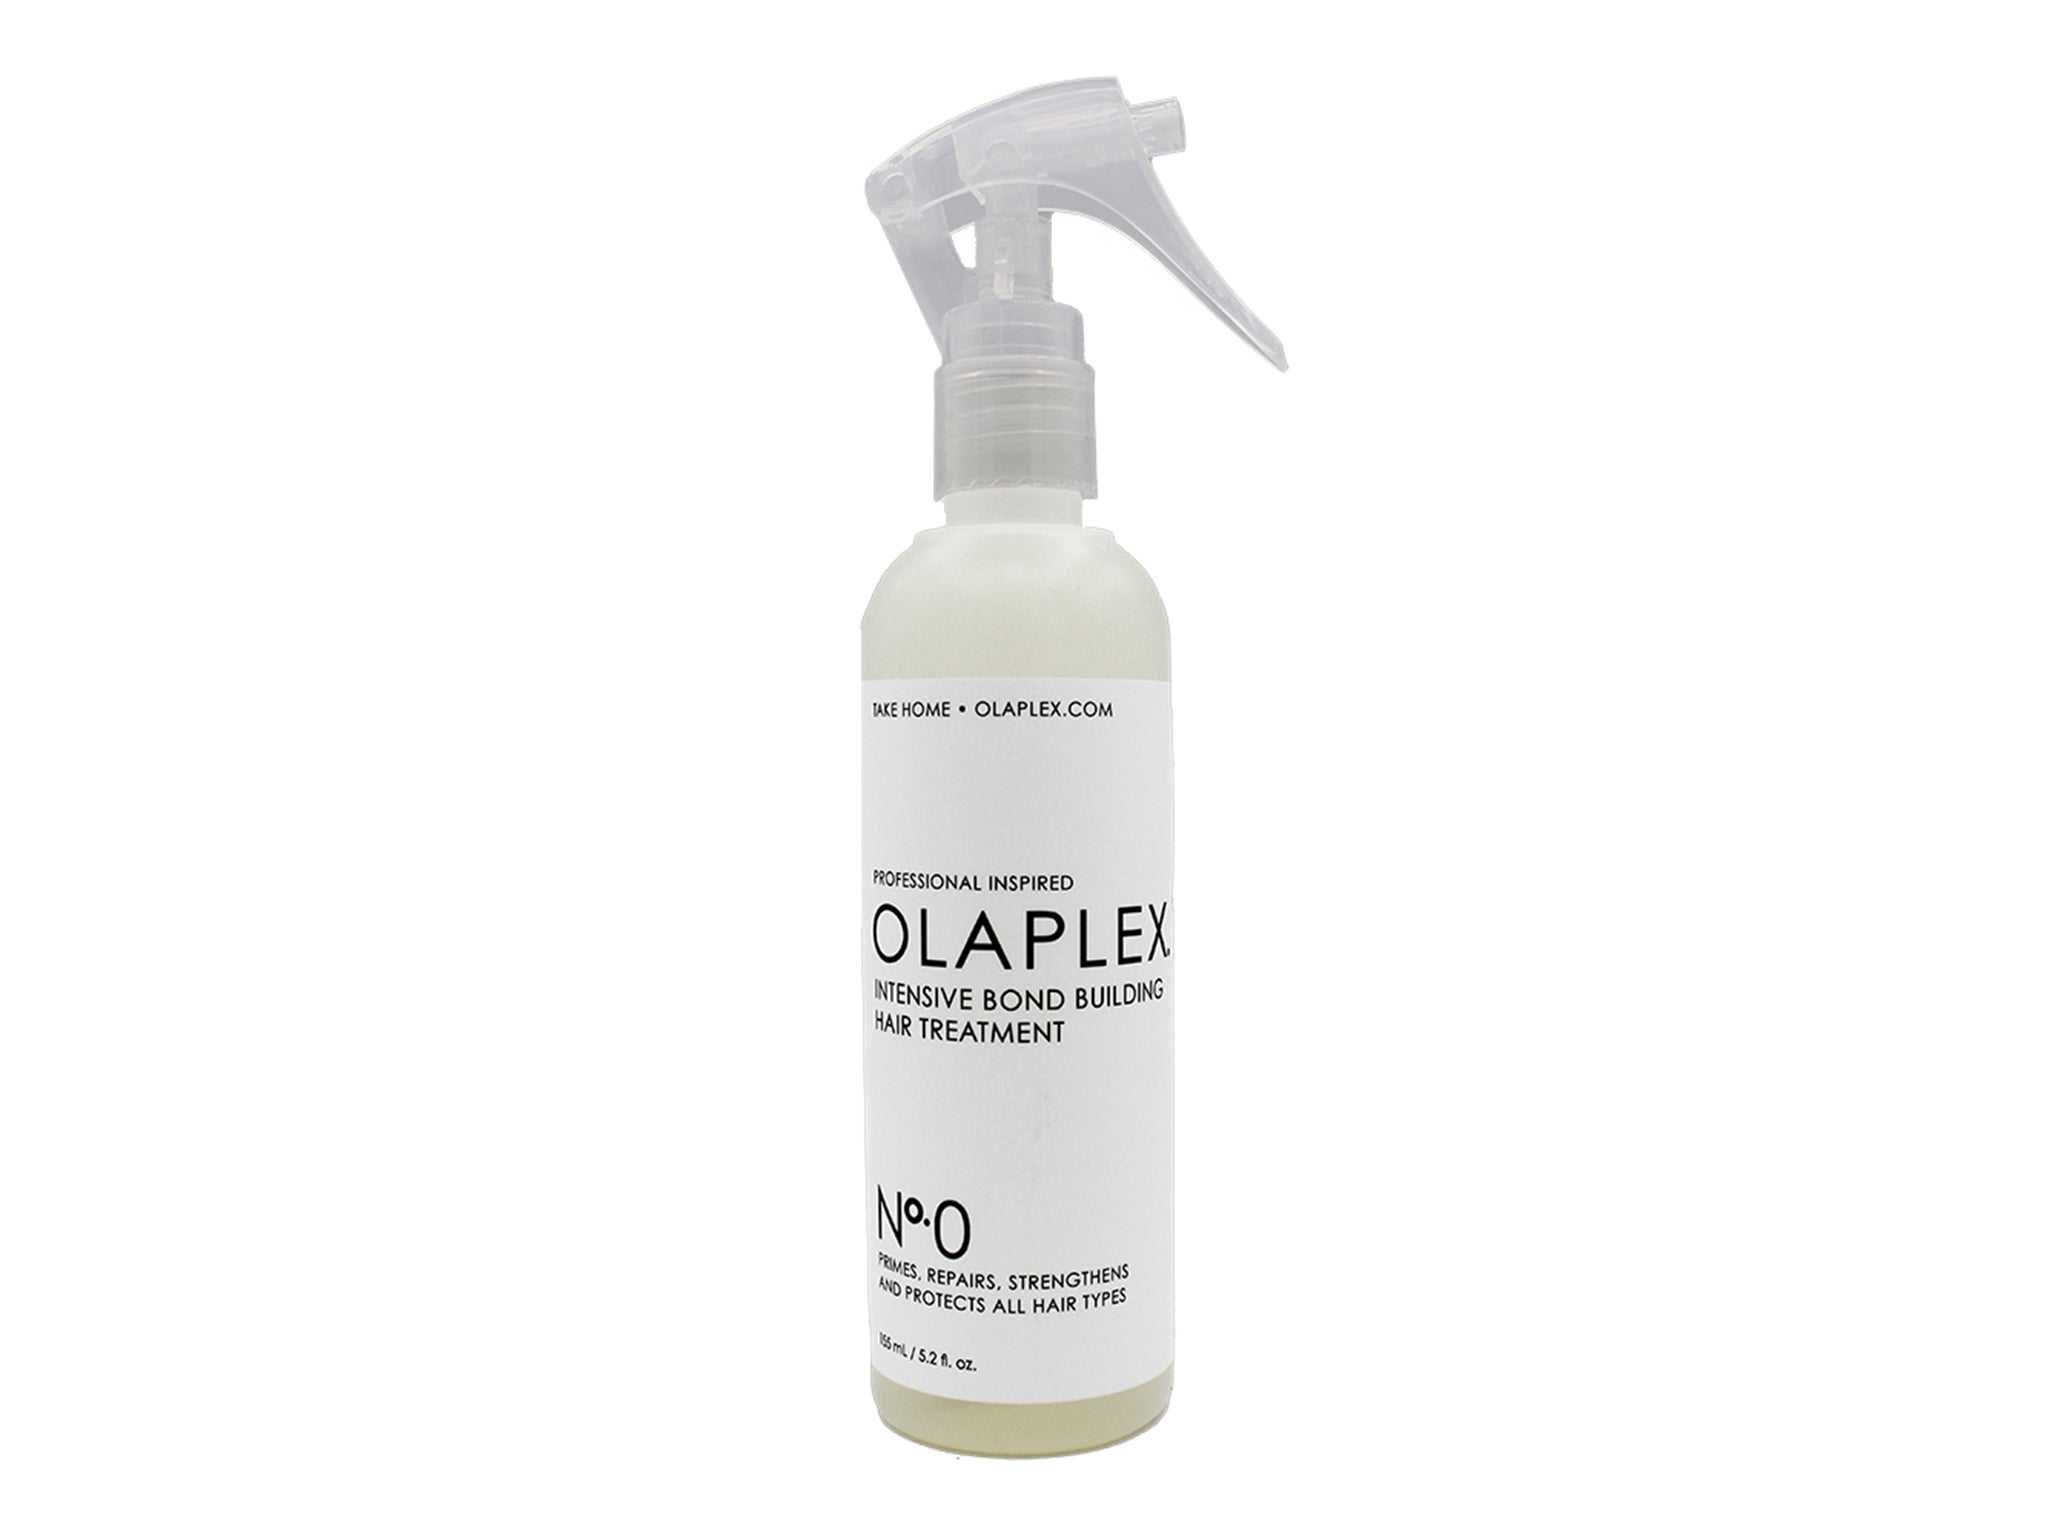 olaplex-No.-0-Intensive-Bond-Building-Hair-Treatment-review-indybest.jpg